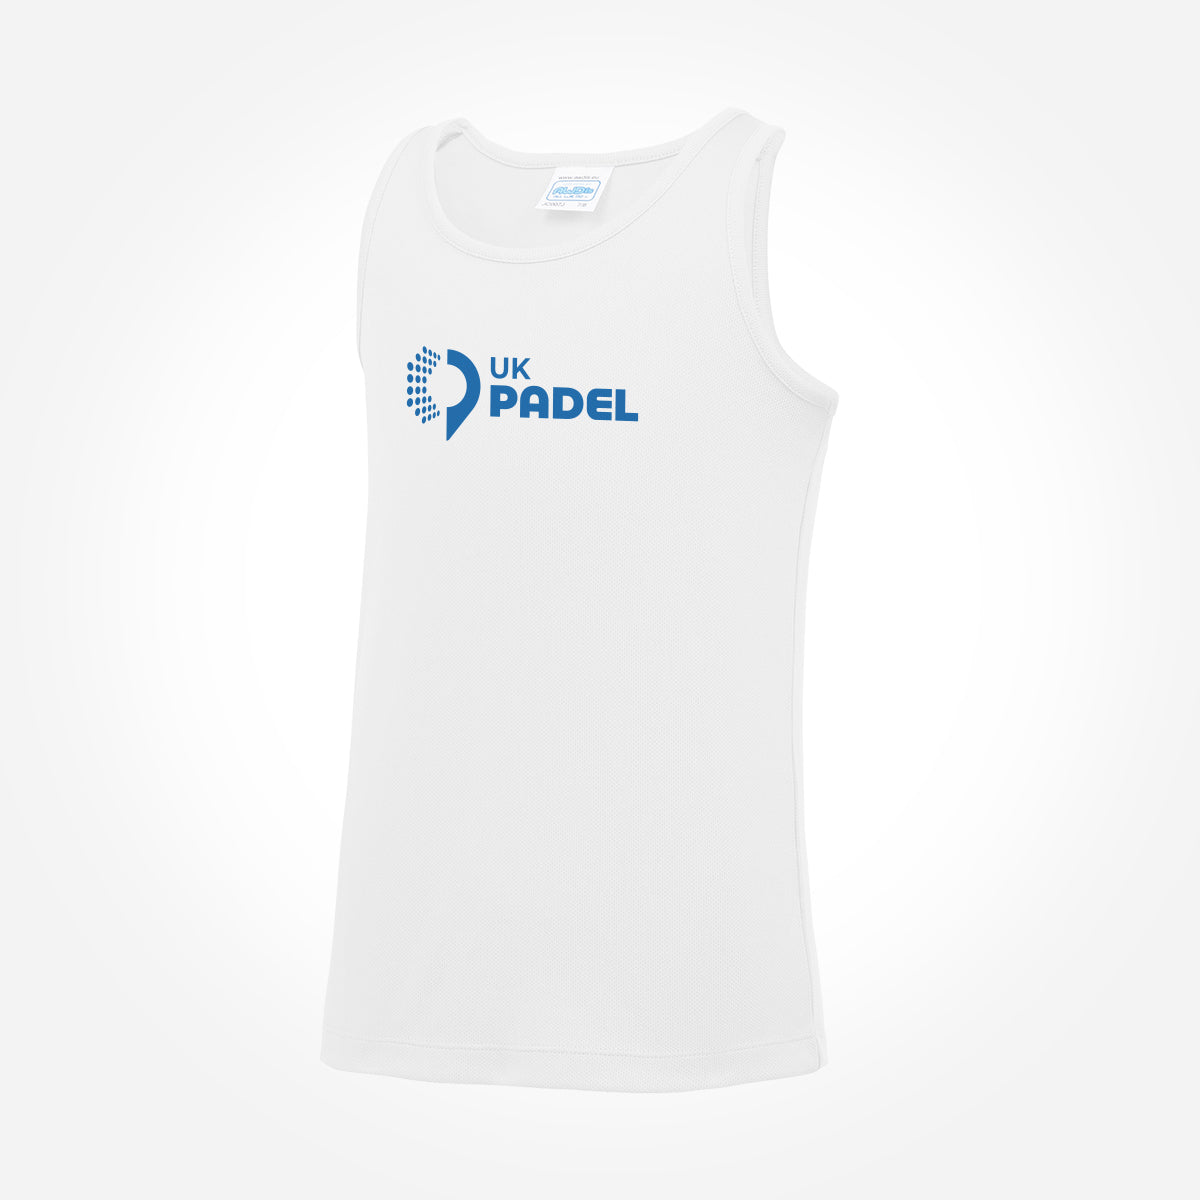 UK Padel Kids cool vest (large UK Padel logo)